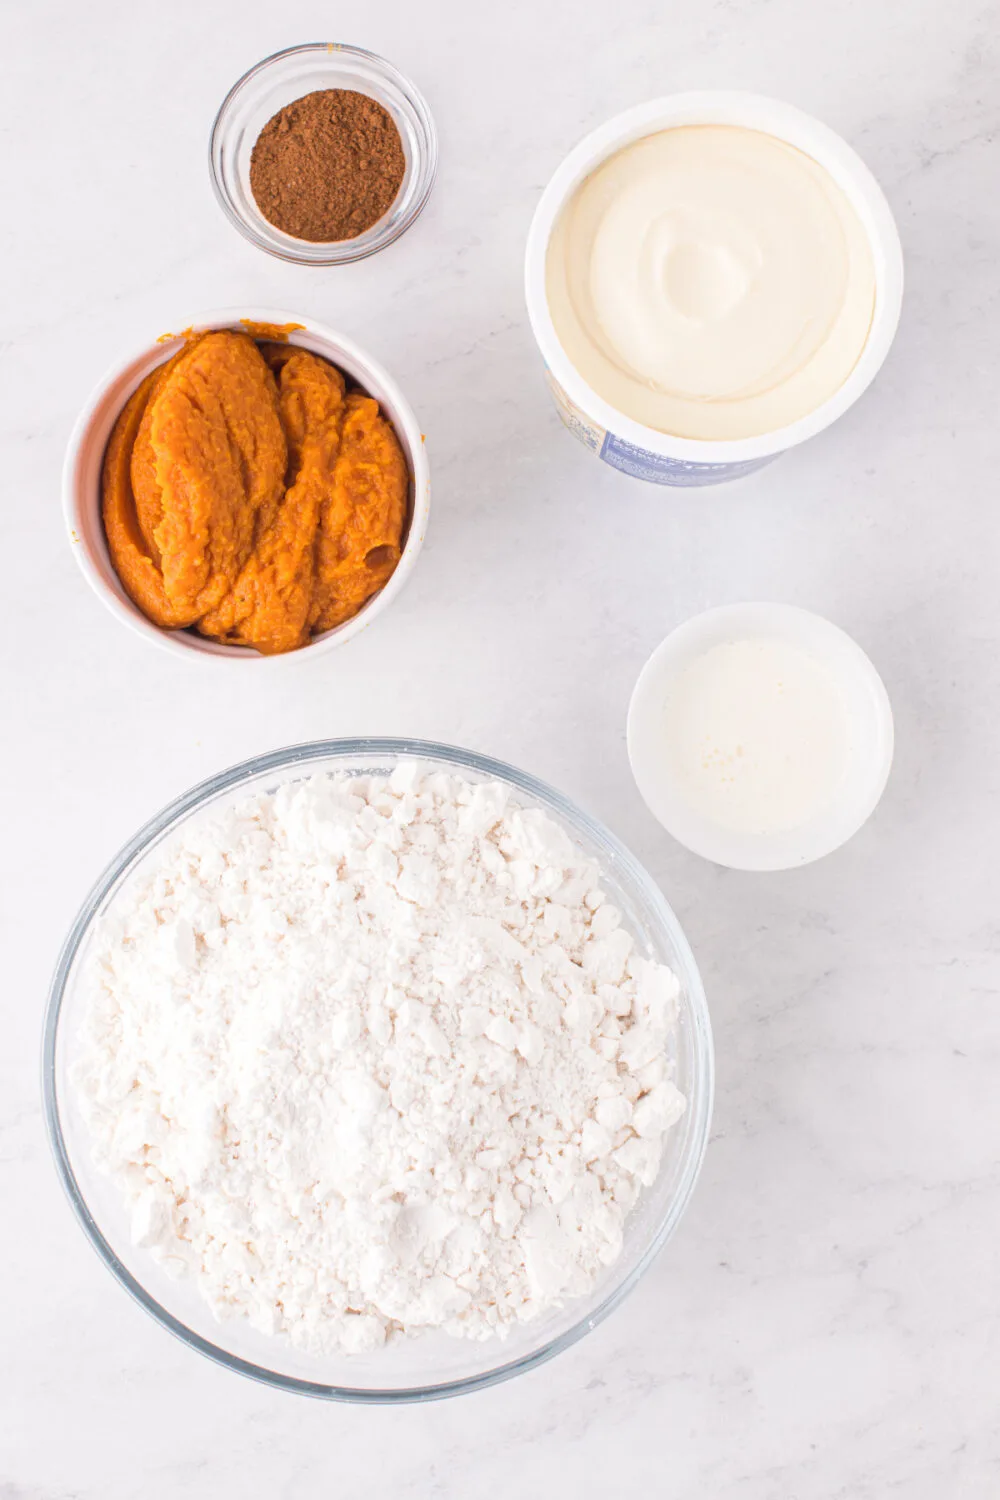 Pumpkin, flour, cinnamon, and other ingredients for pumpkin cookies in bowls.